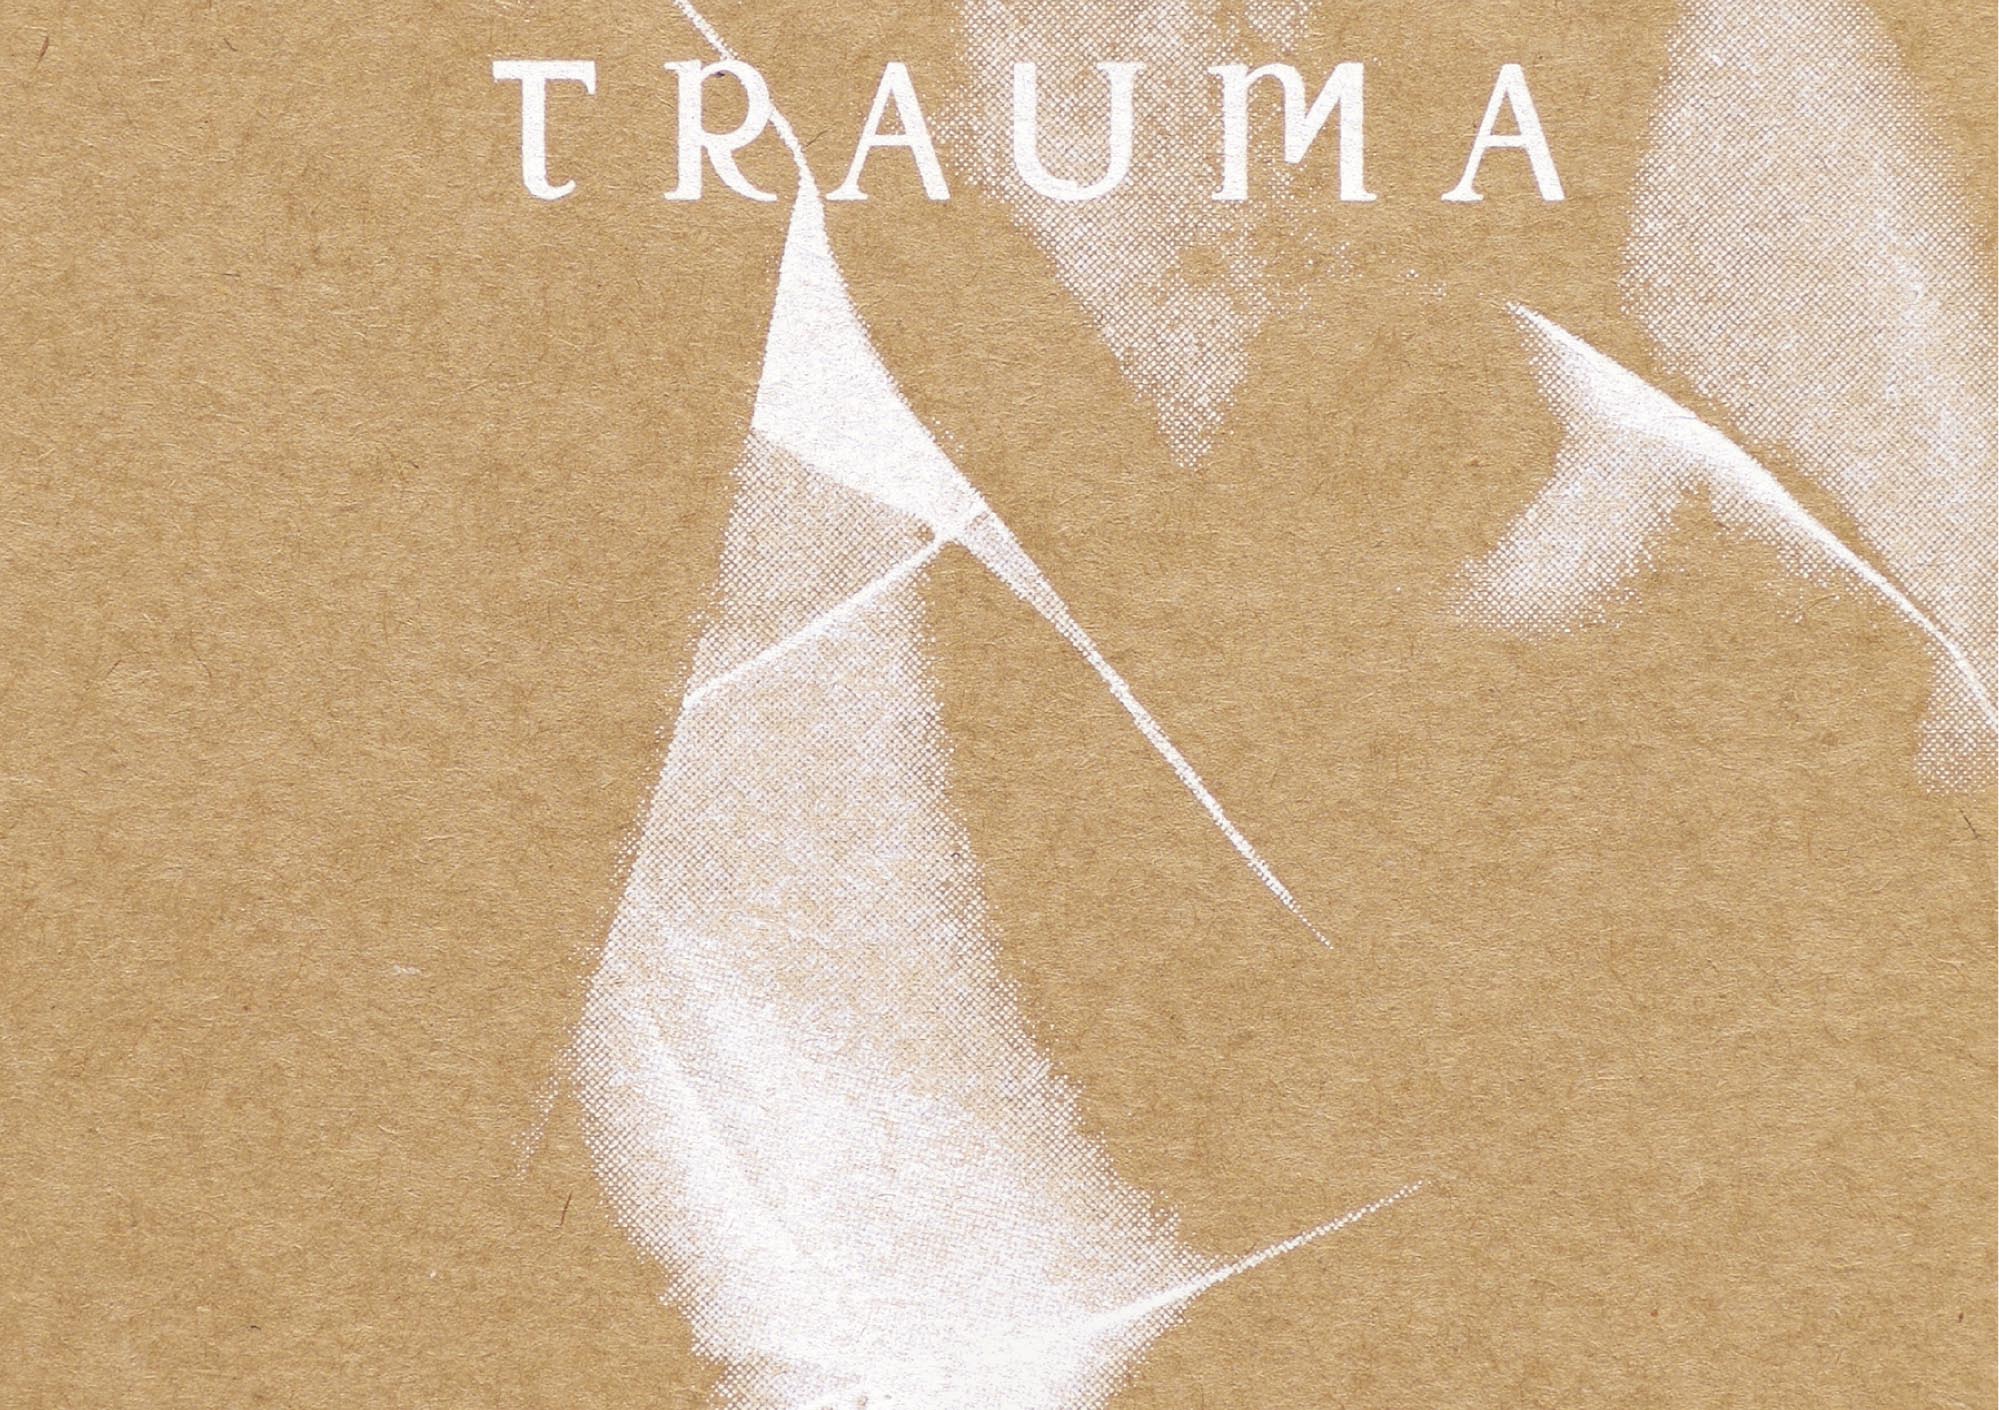 Trauma-2